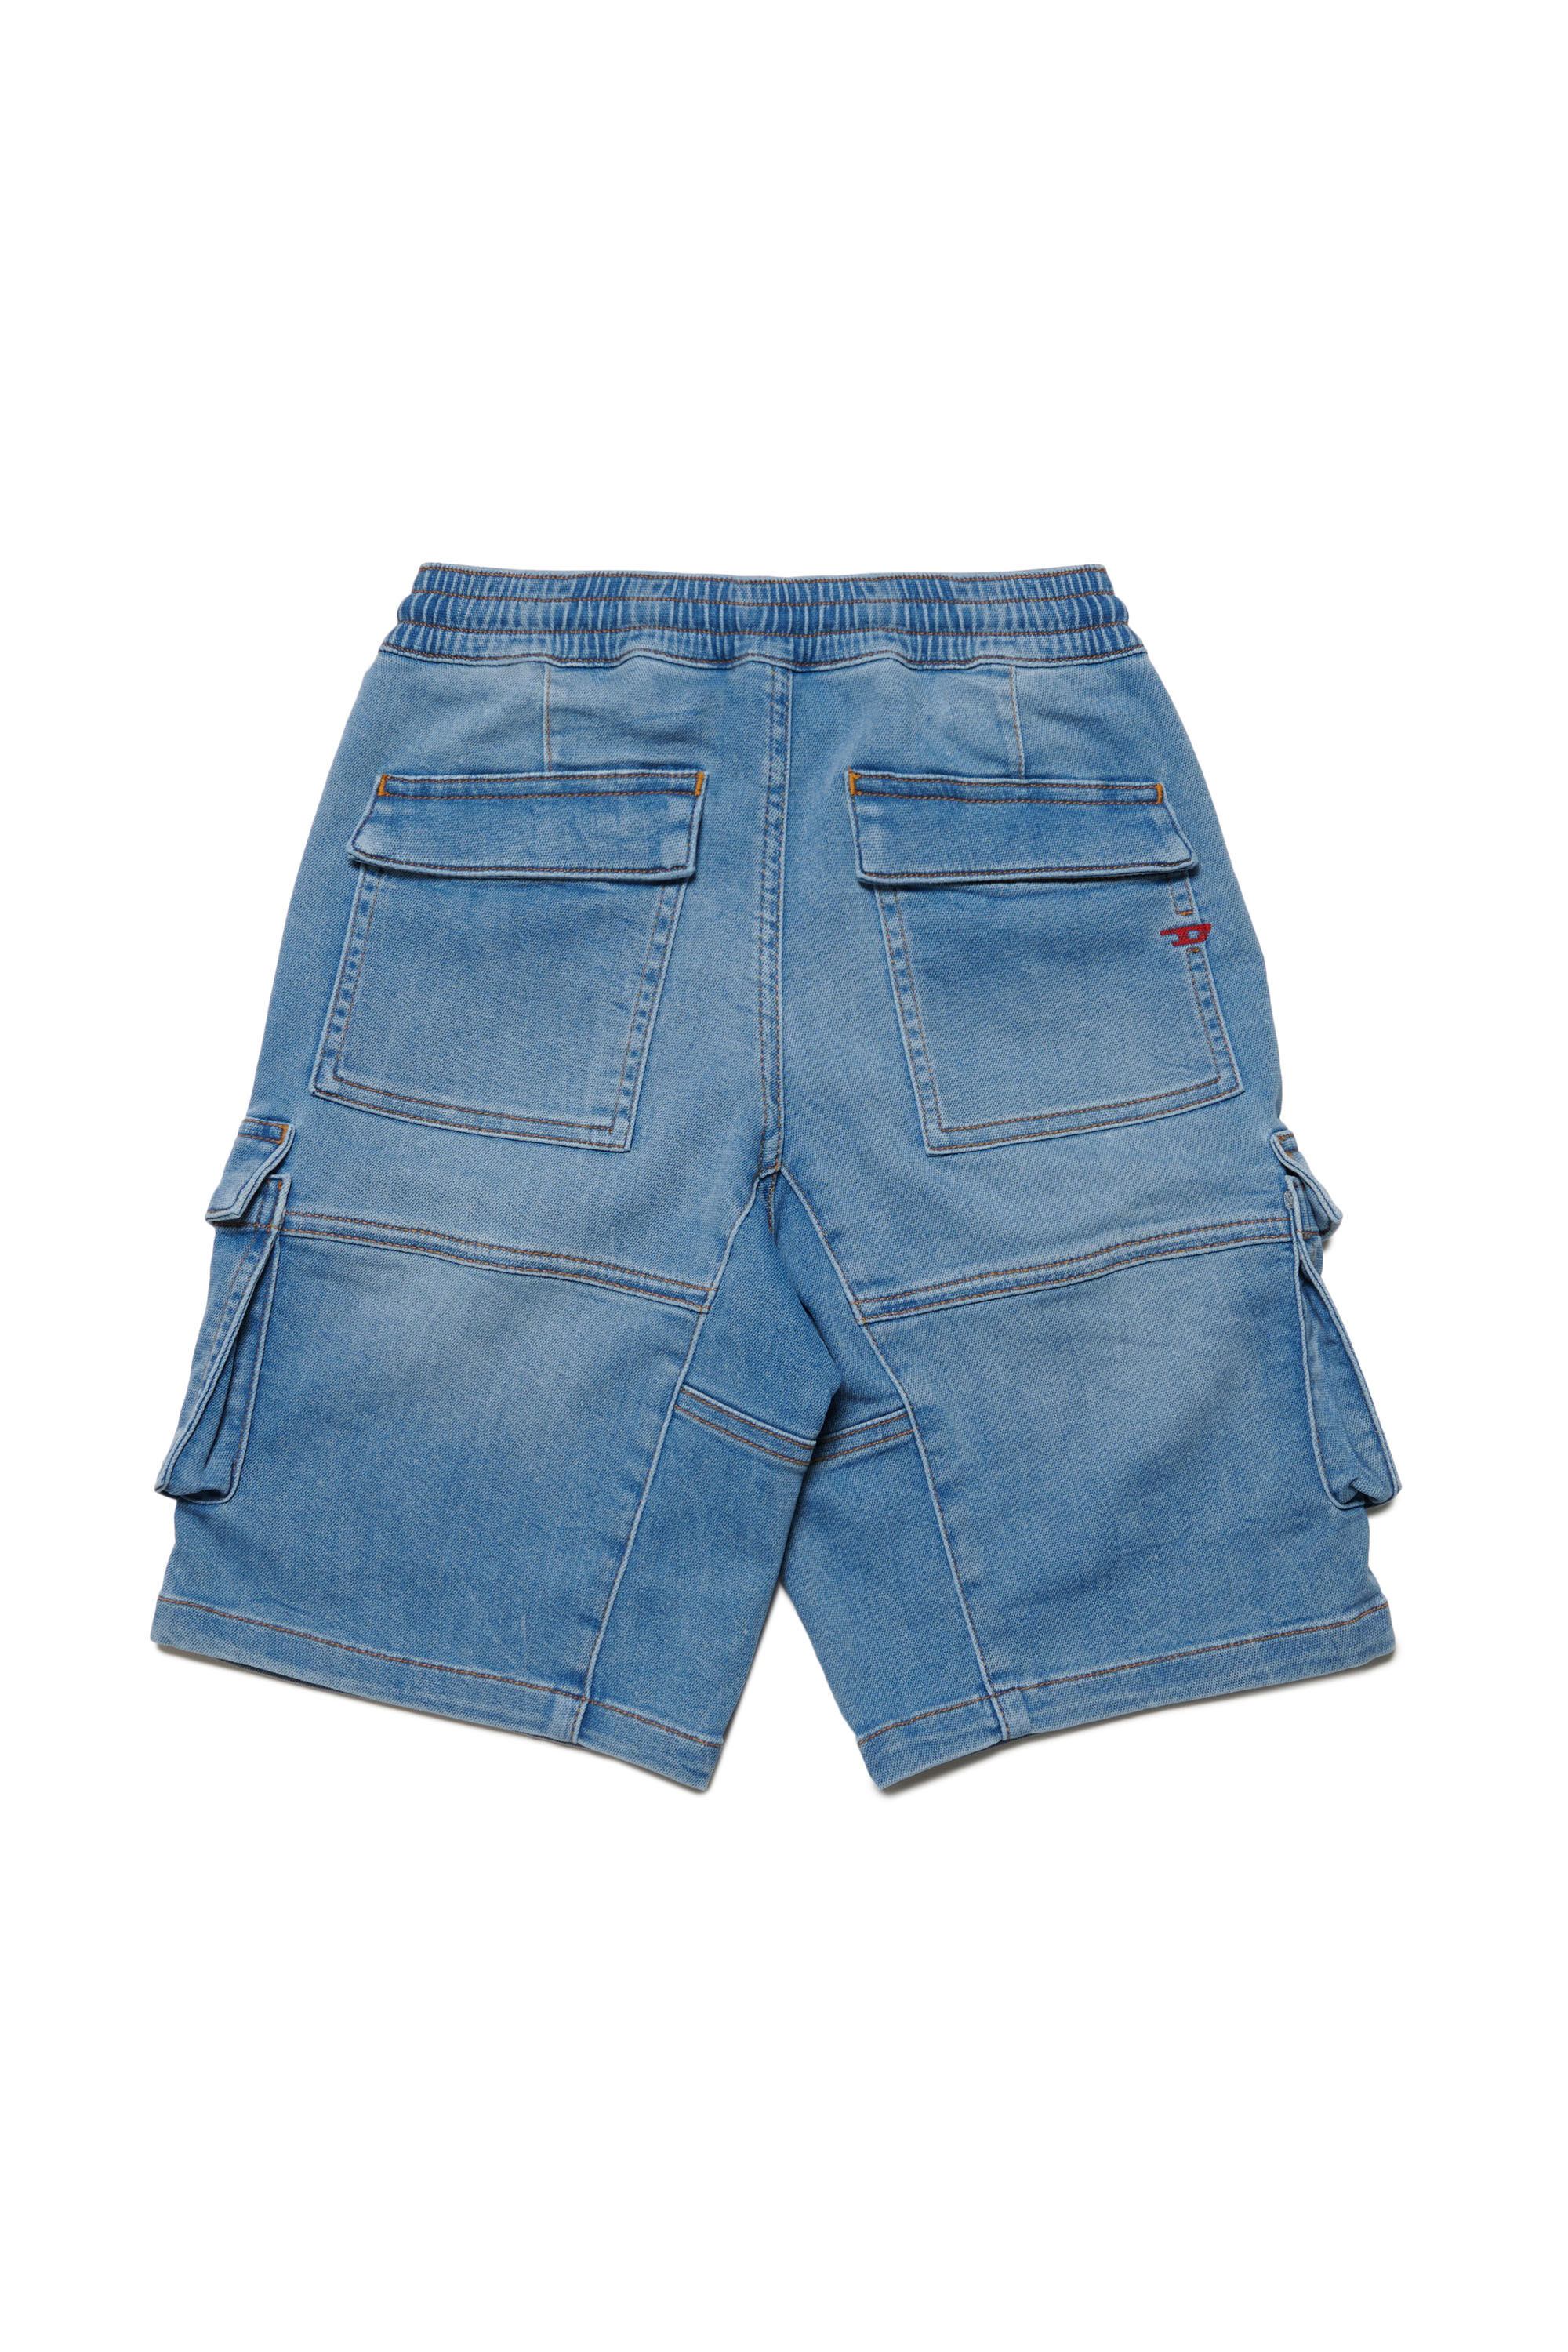 D-KROOLEY-CARGO-SH-J JJJ Krooley JoggJeans cargo shorts｜ブルー ...